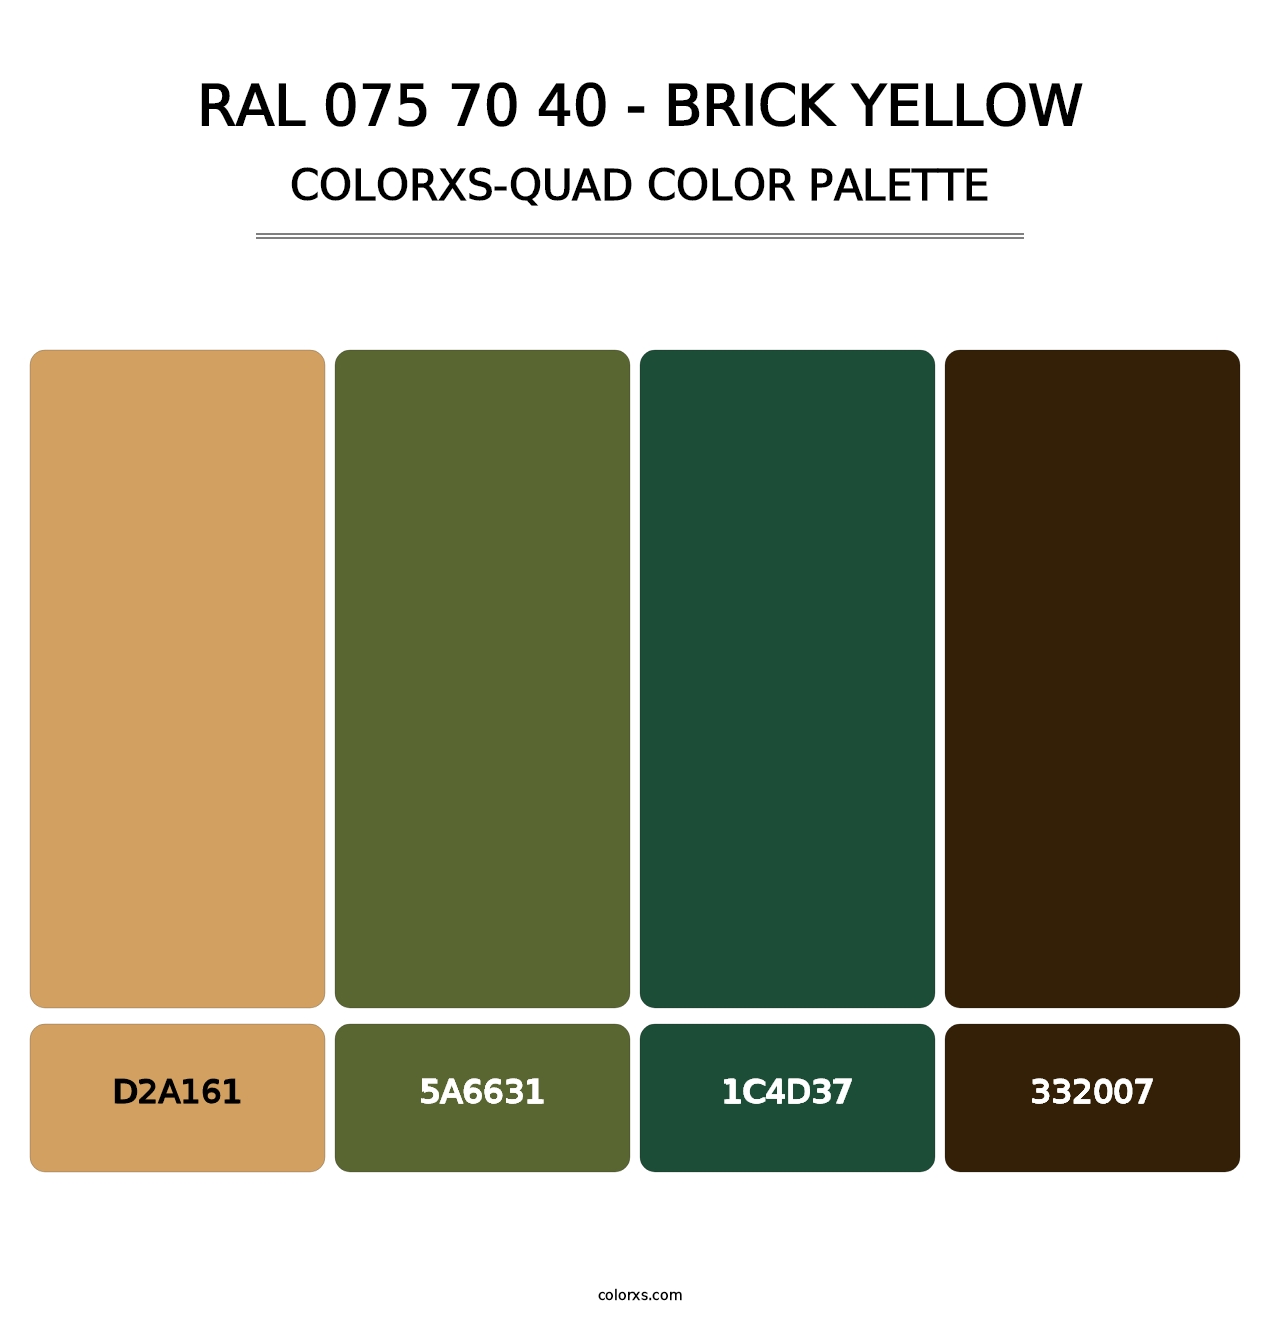 RAL 075 70 40 - Brick Yellow - Colorxs Quad Palette